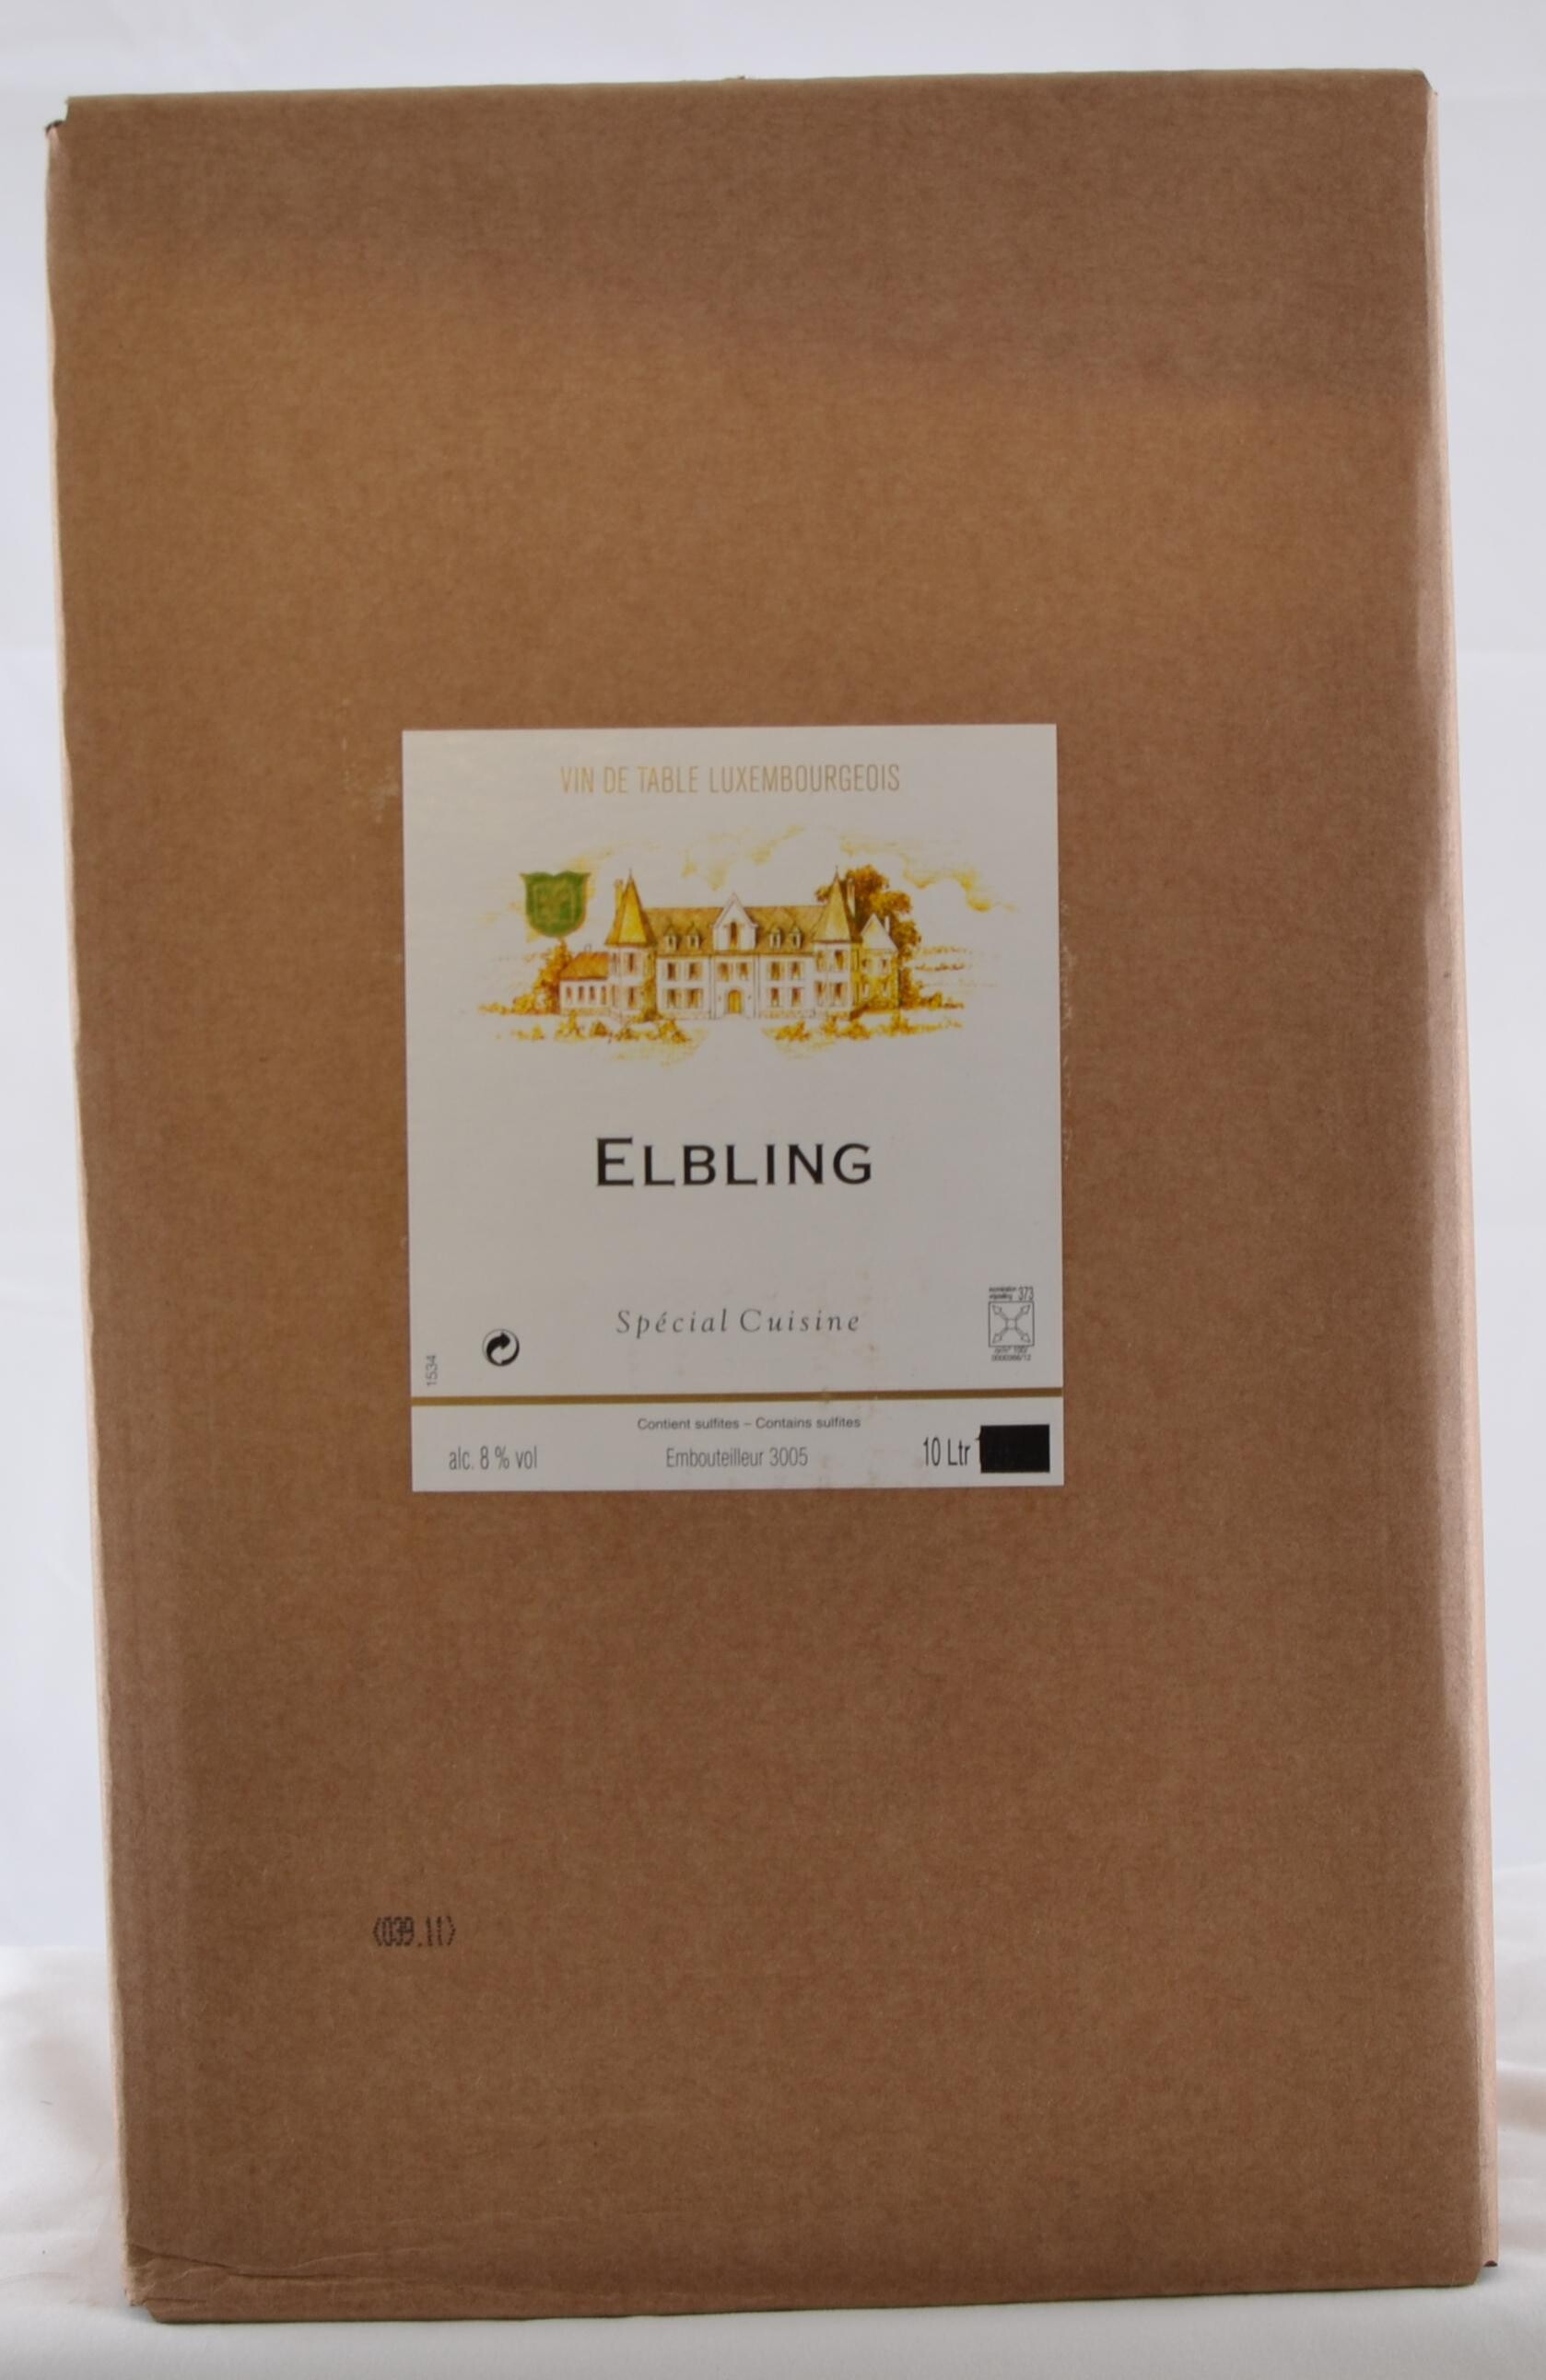 Elbling Special Cuisine 10L 8.5% Bag in Box